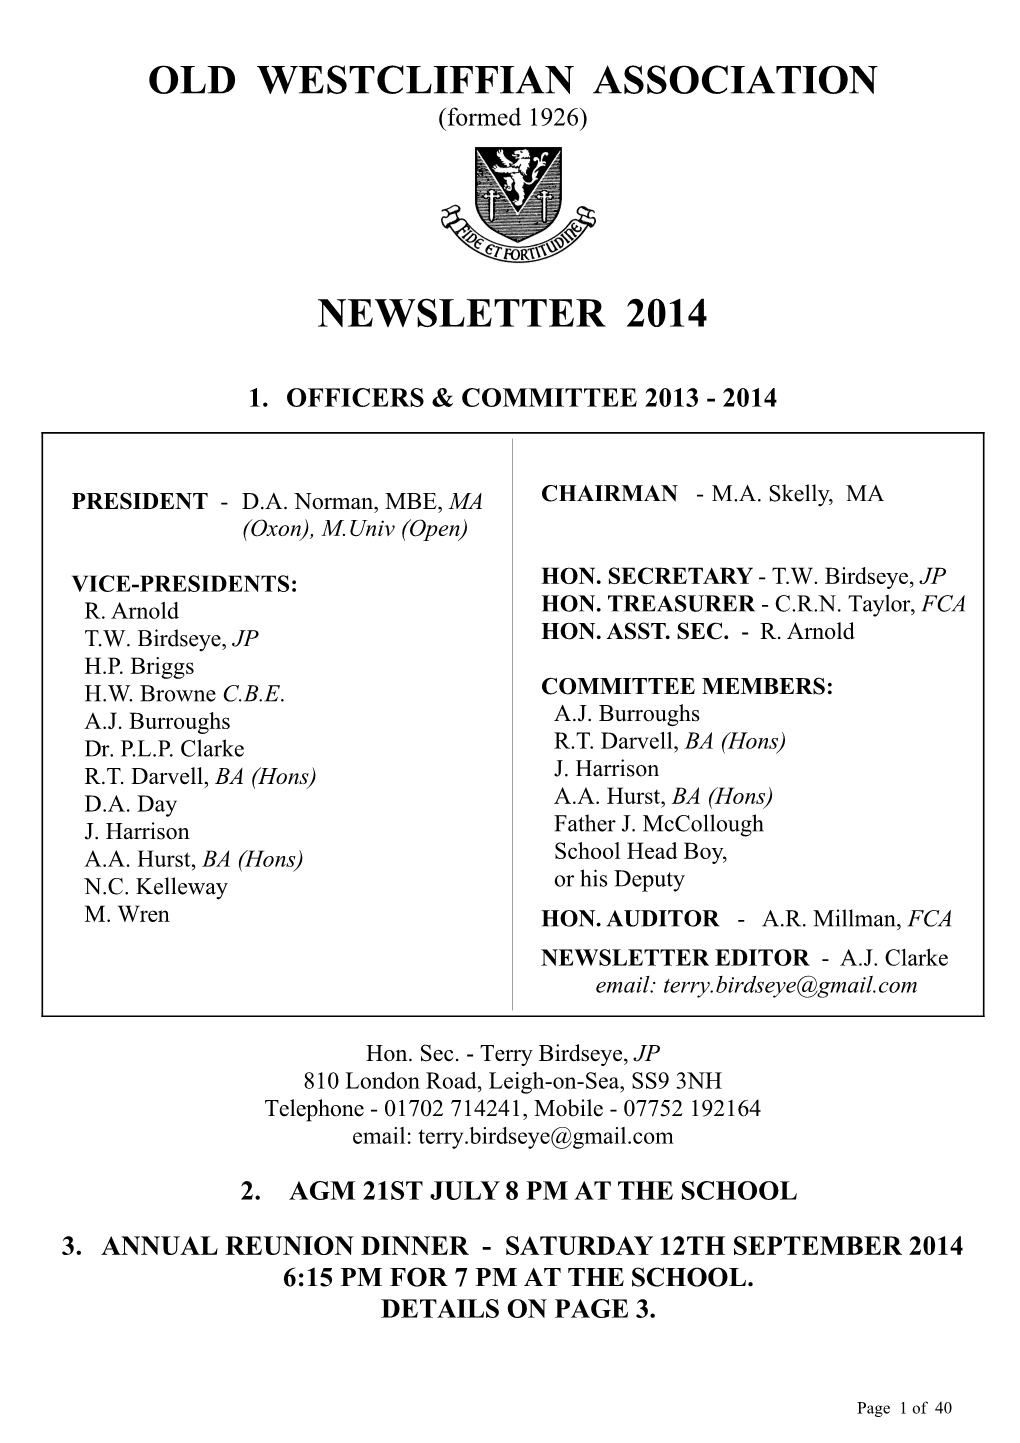 OWA Newsletter 2014 PDF File